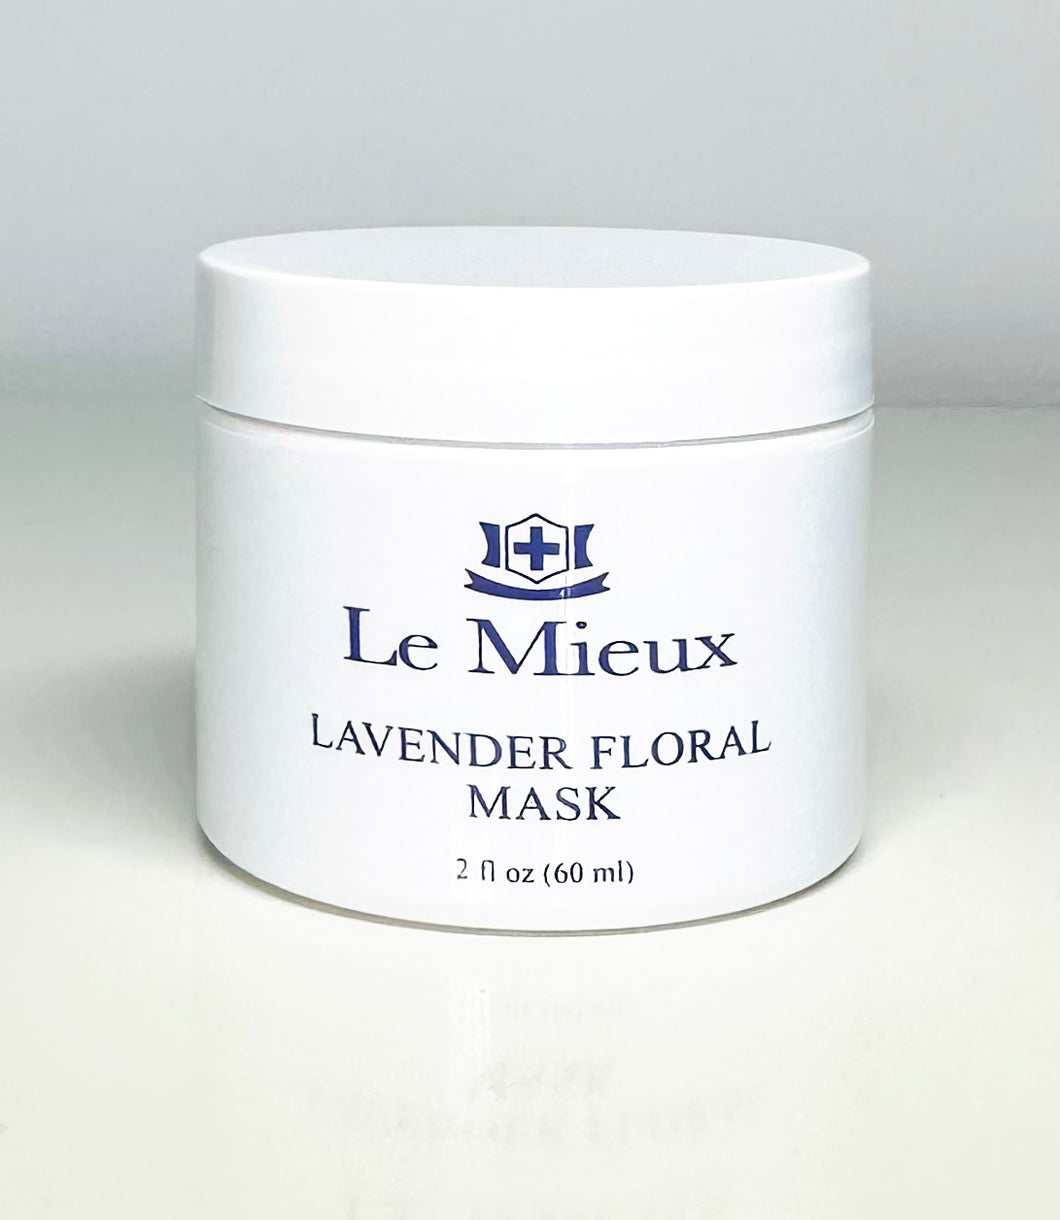 Le Mieux Lavender Floral Mask - Calming Gel Face Mask with Hyaluronic Acid